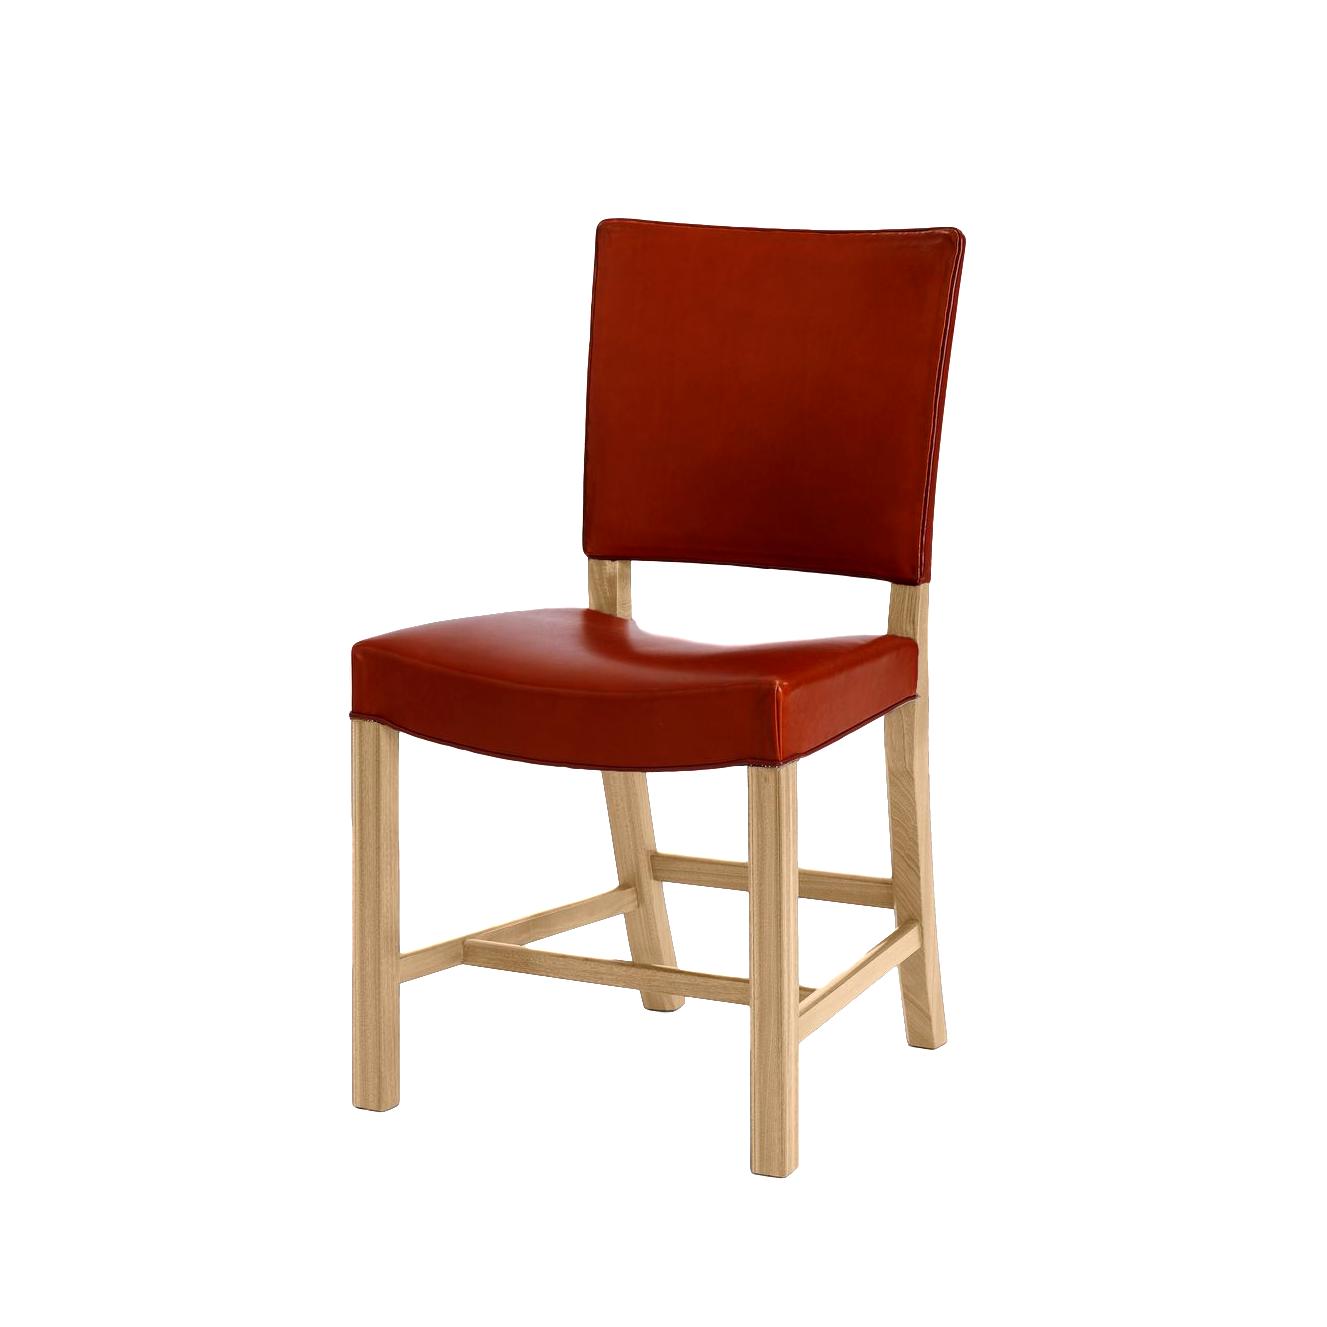 Carl Hansen KK39490 Piccola sedia rossa, pelle in sapone/nera in quercia